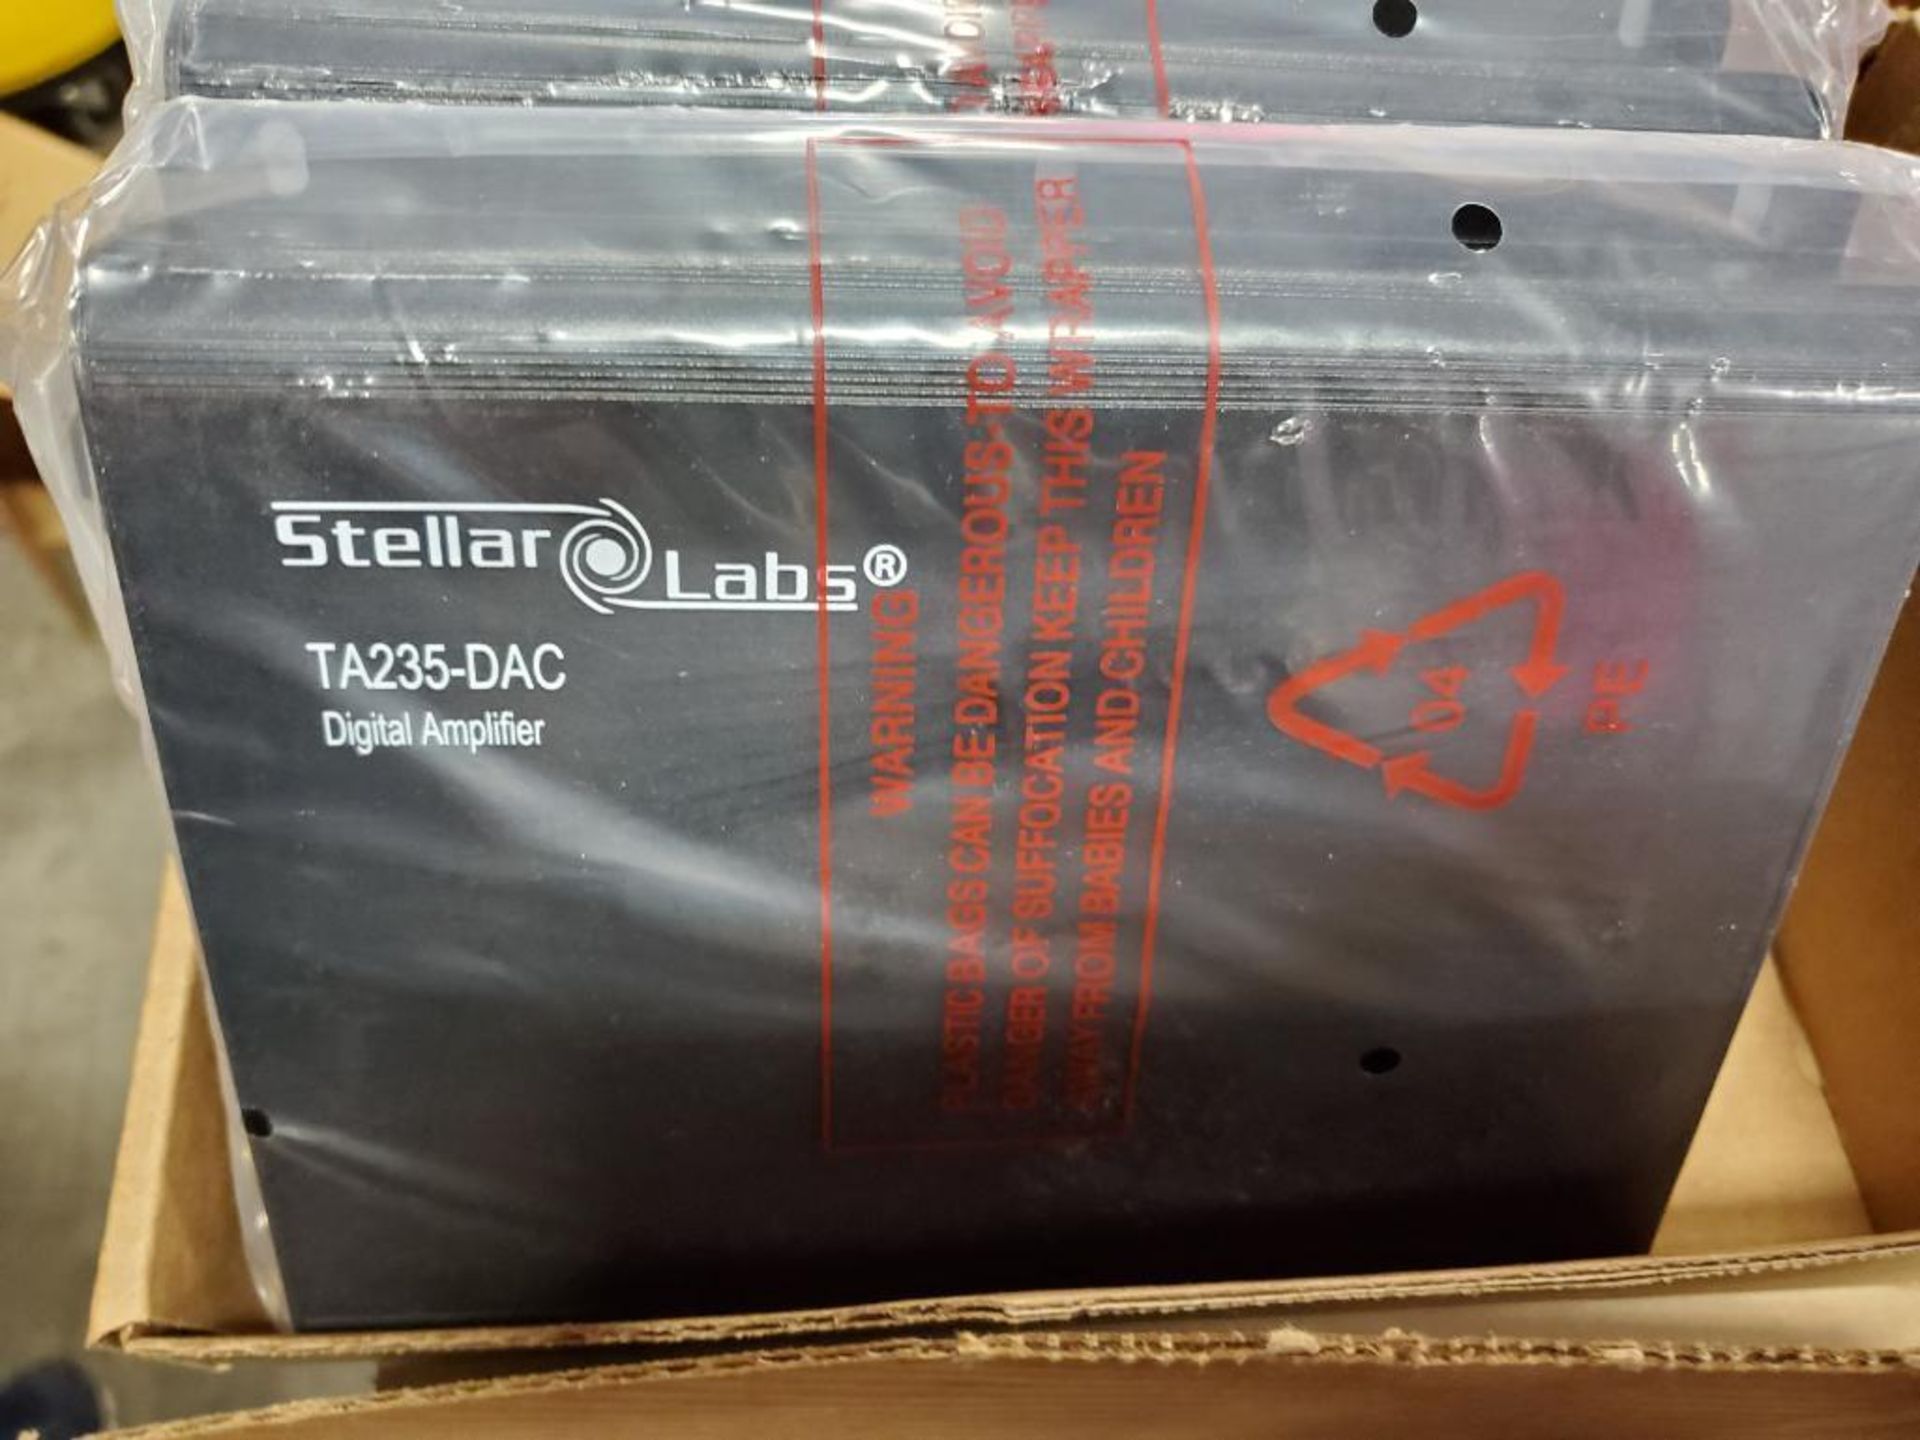 Qty 4 - Stellar Labs TA235-DAC digital amplifier. New in package. - Image 3 of 4